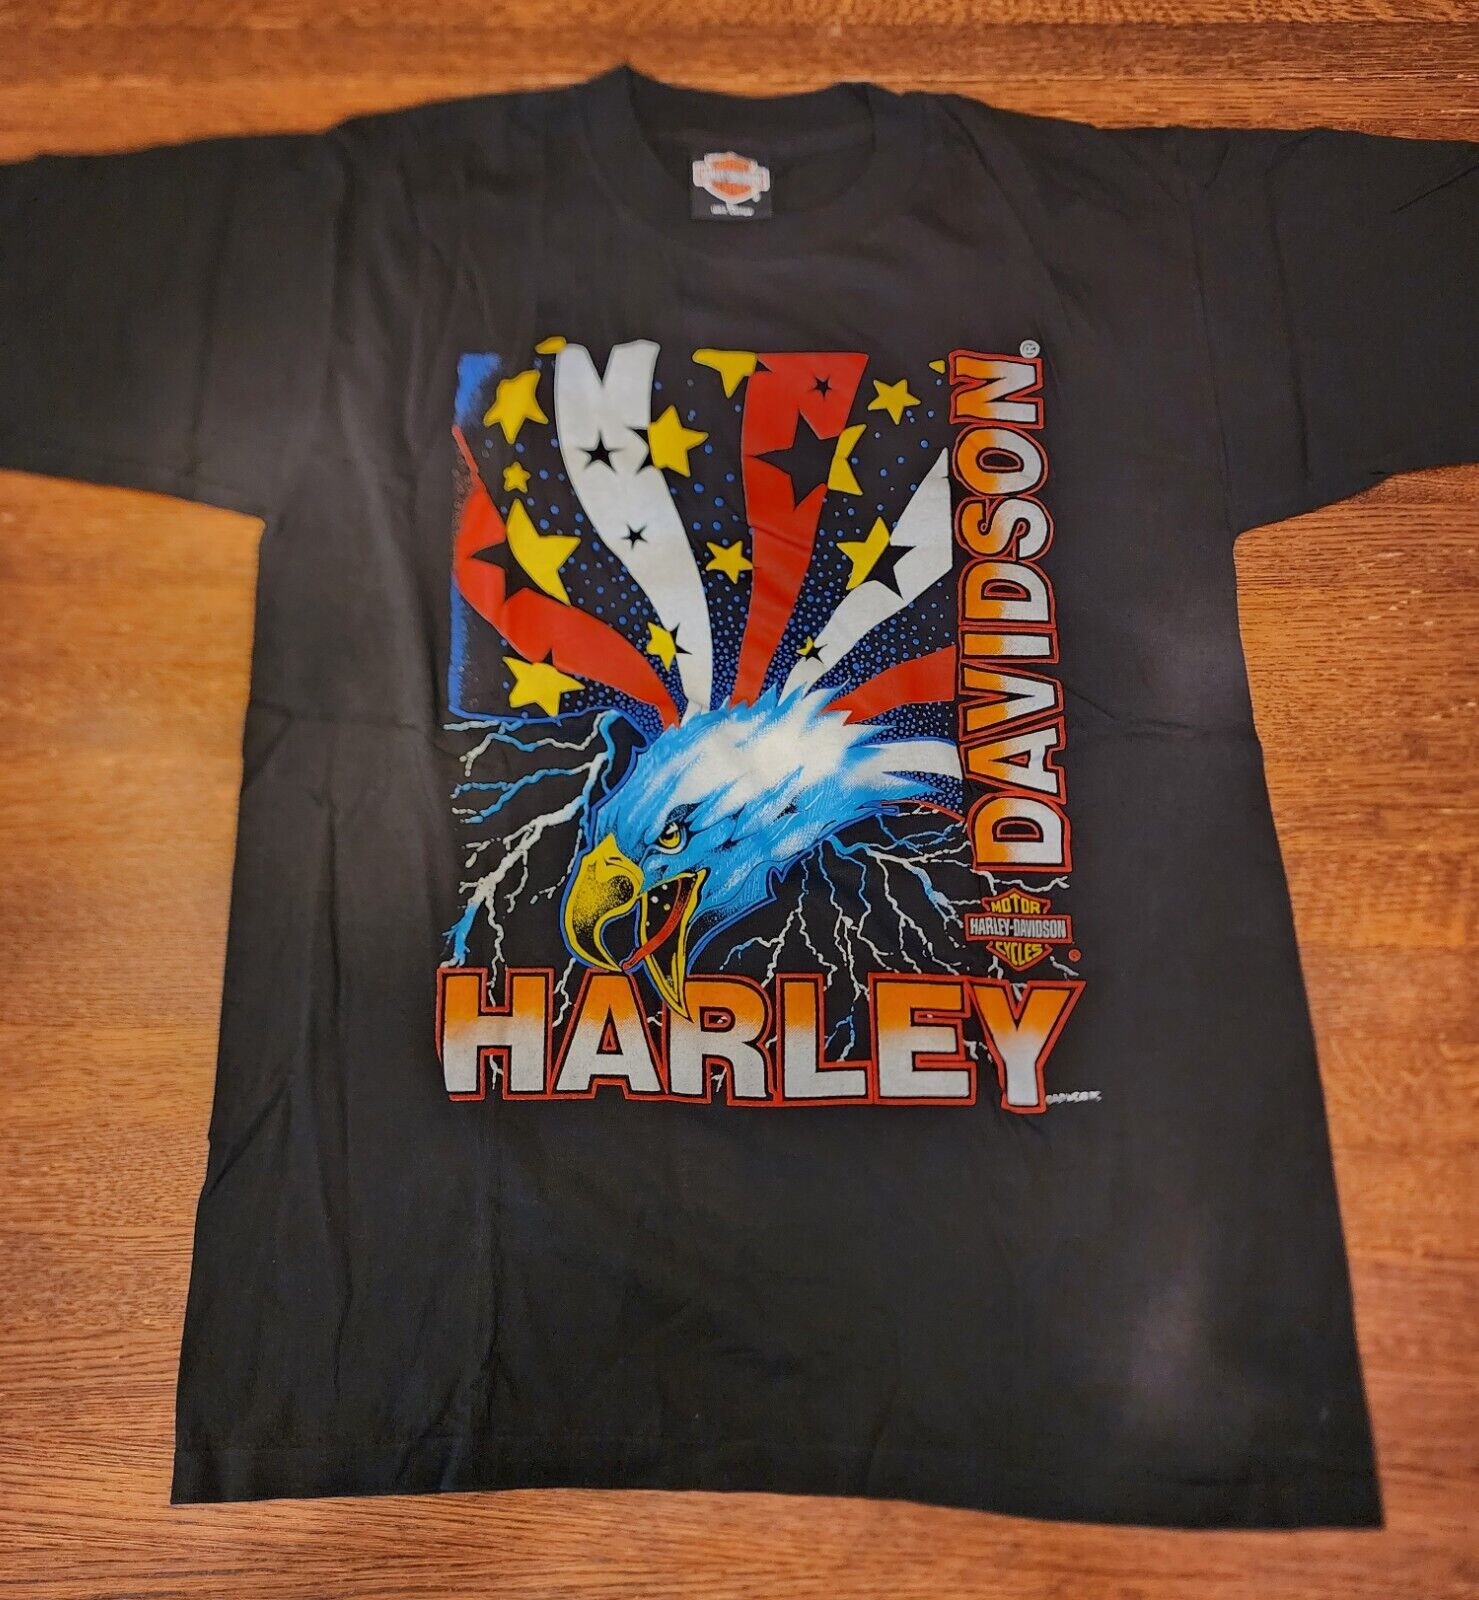 Vintage 90’s Harley Davidson Bold Eagle with Stars T-shirt - NEW, UNWORN